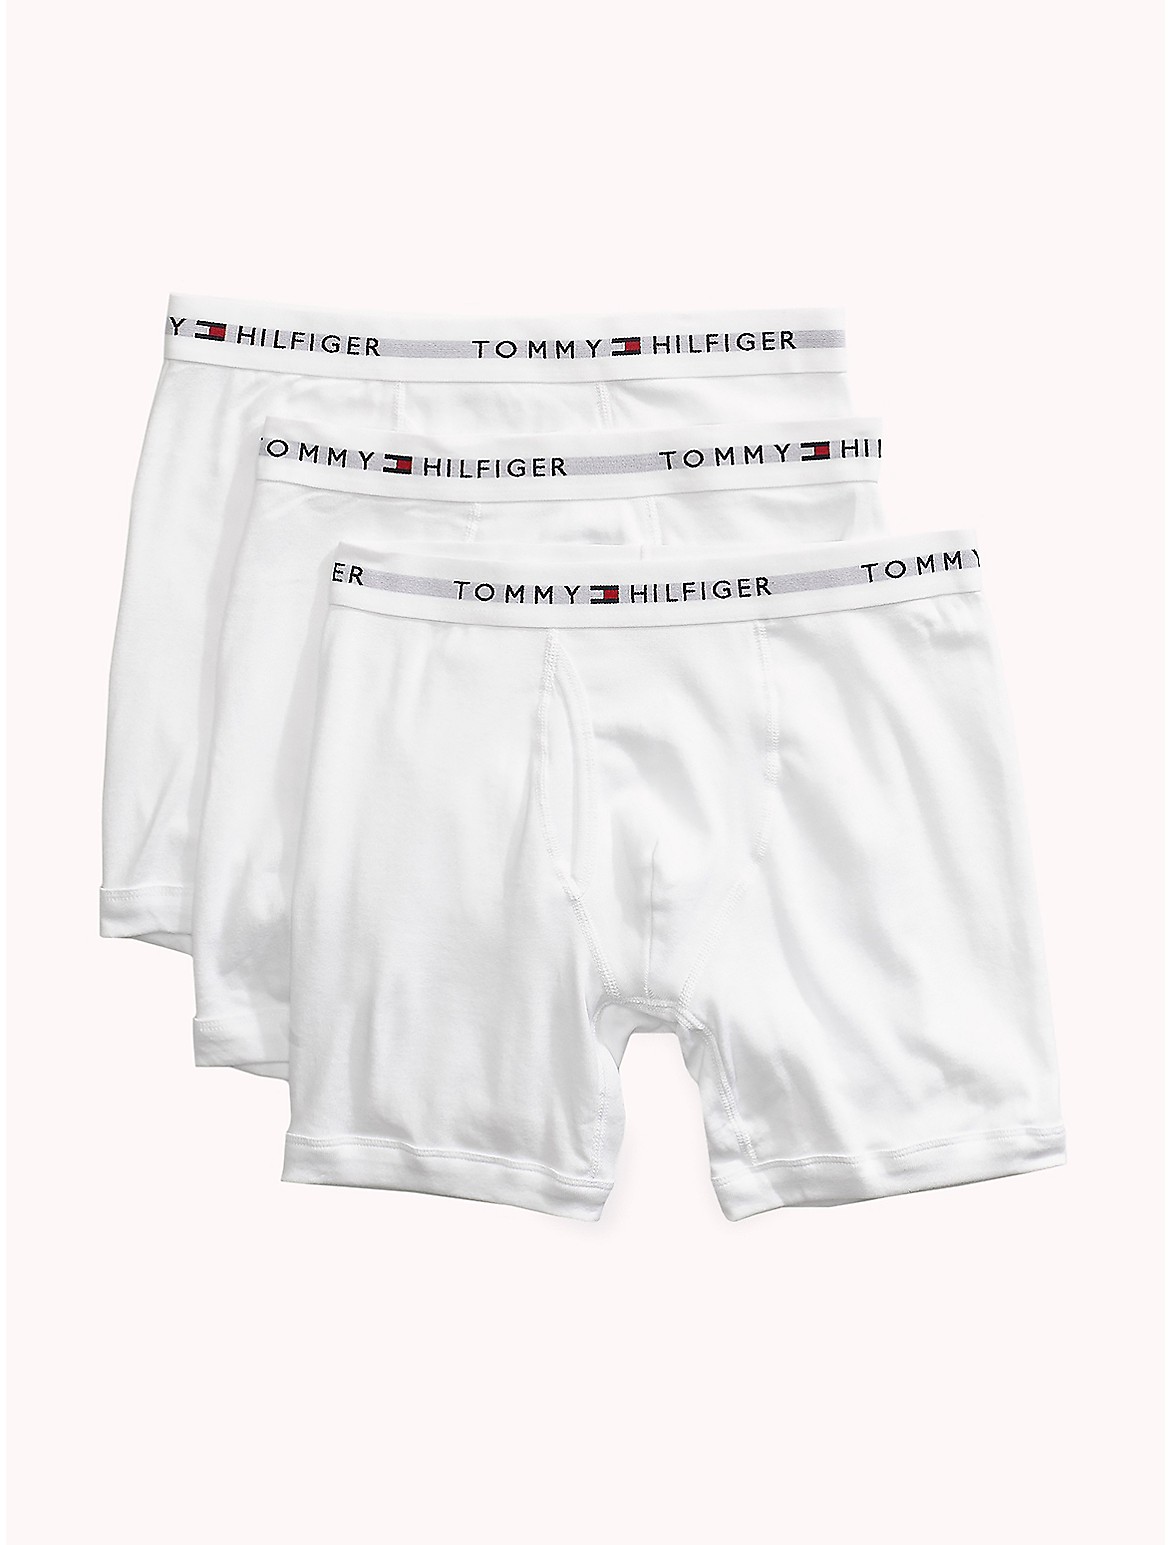 Tommy Hilfiger Men's Cotton Classics Boxer Brief 3-Pack - White/Natural - S